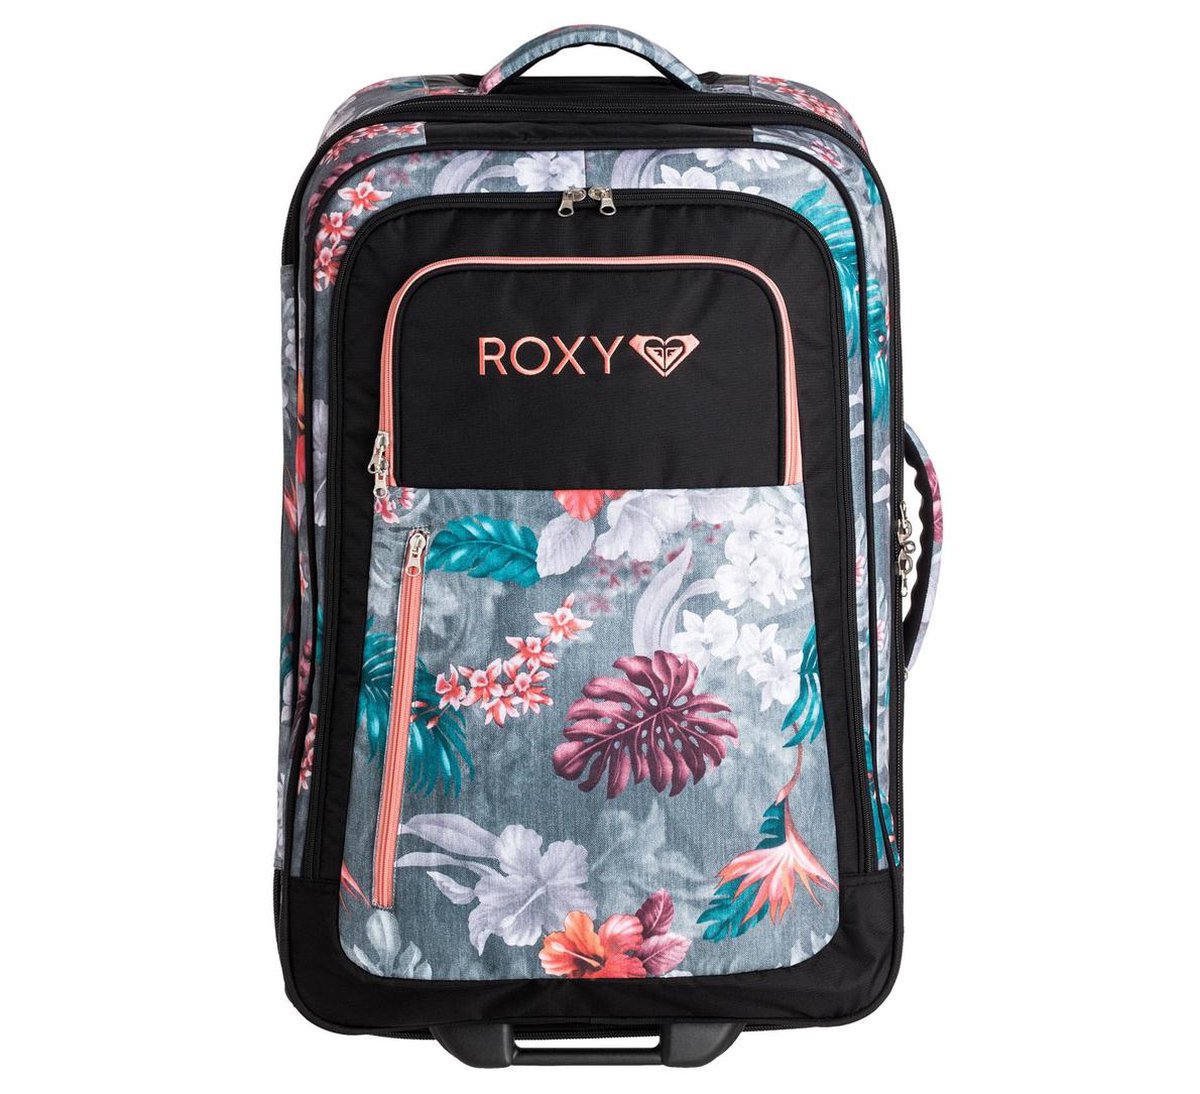 Roxy Reiskoffer - Unisex - zwart/roze/grijs/blauw | bol.com